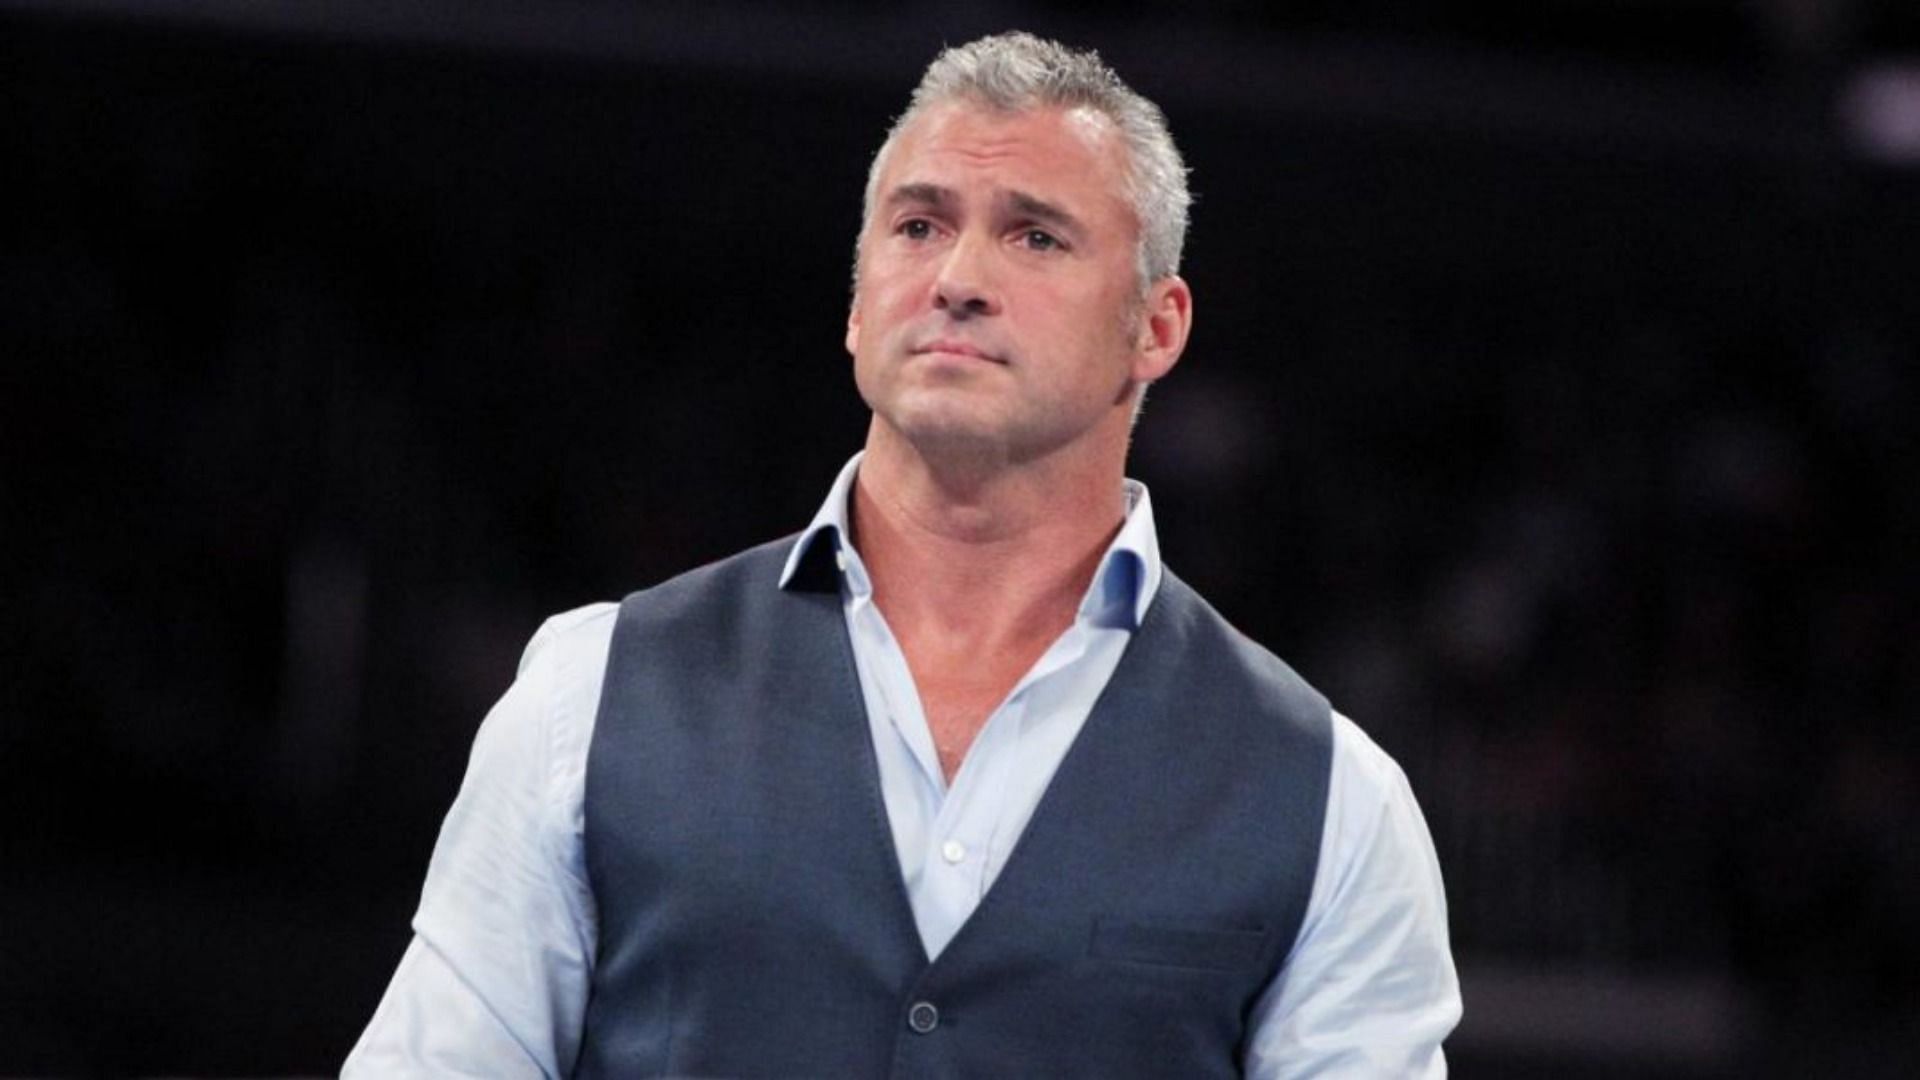 Shane-O-Mac is no longer with WWE.